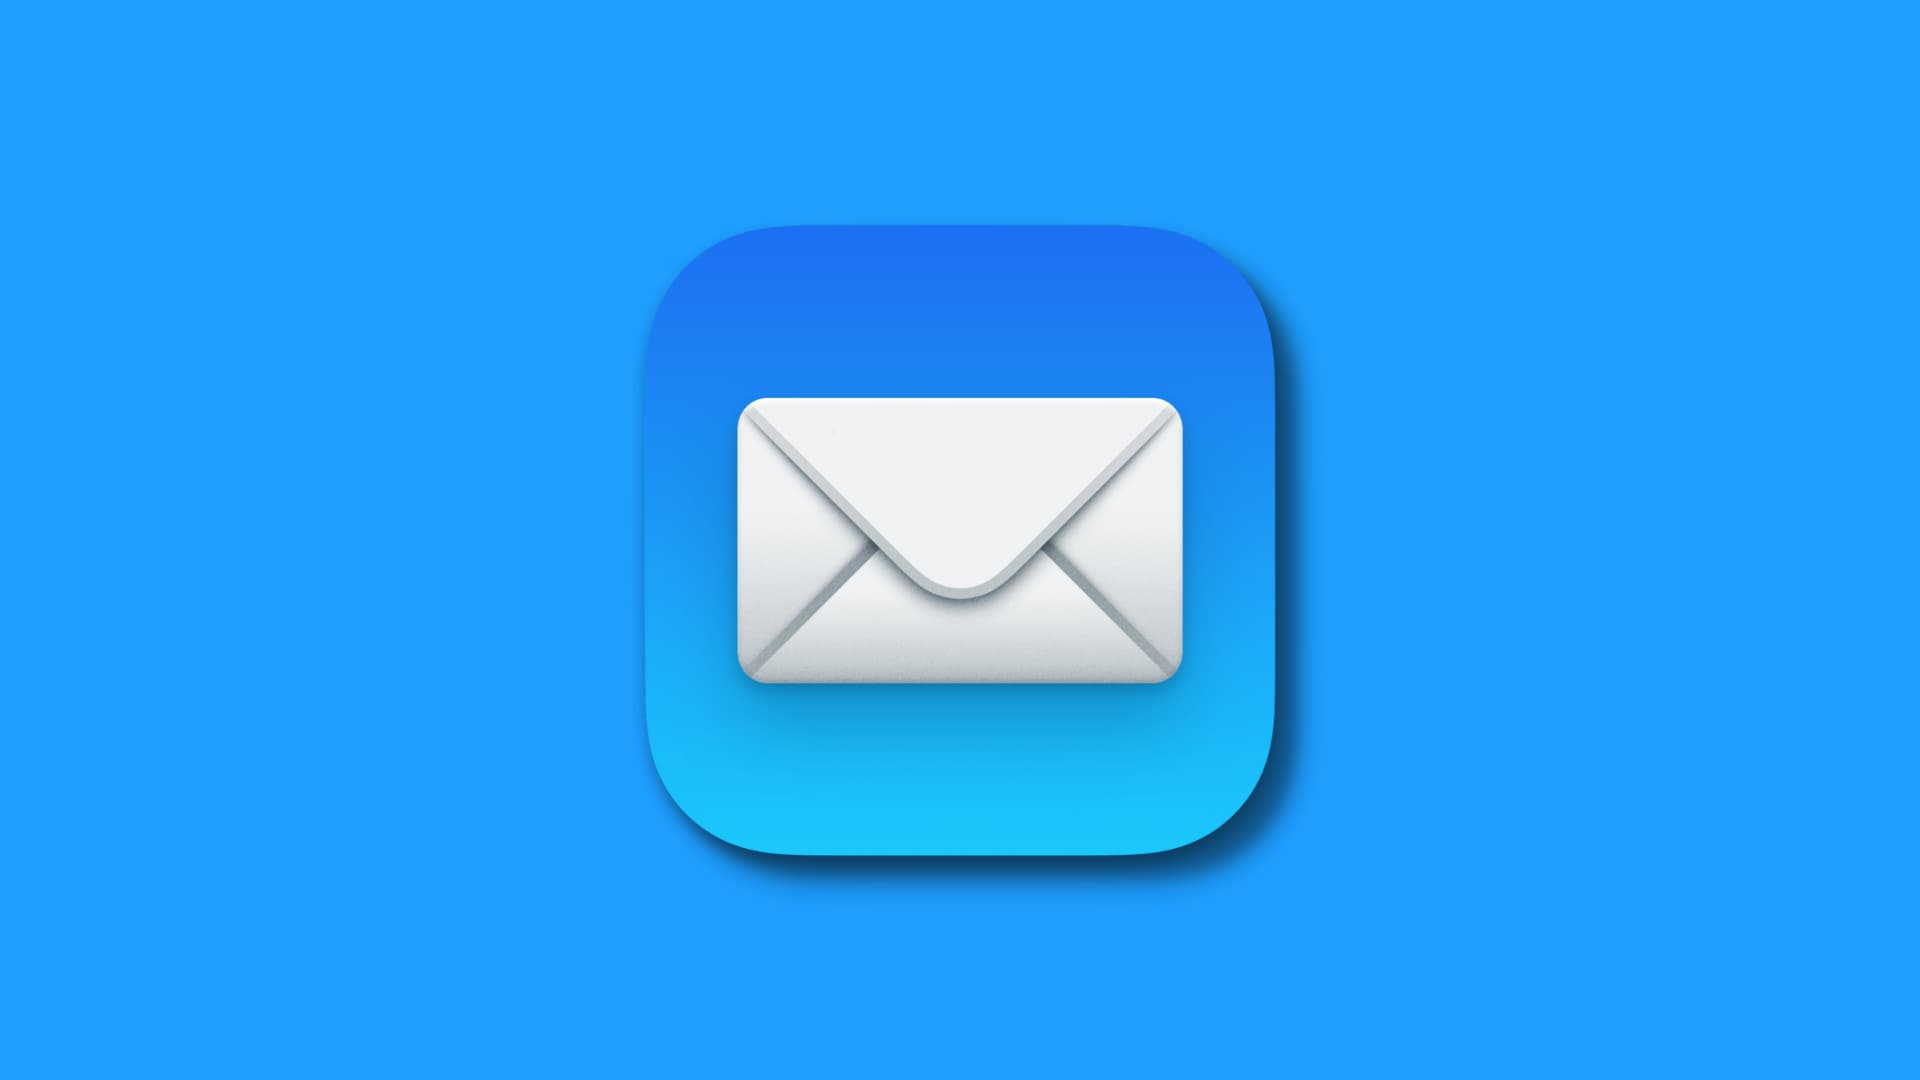 Apple Mail app icon